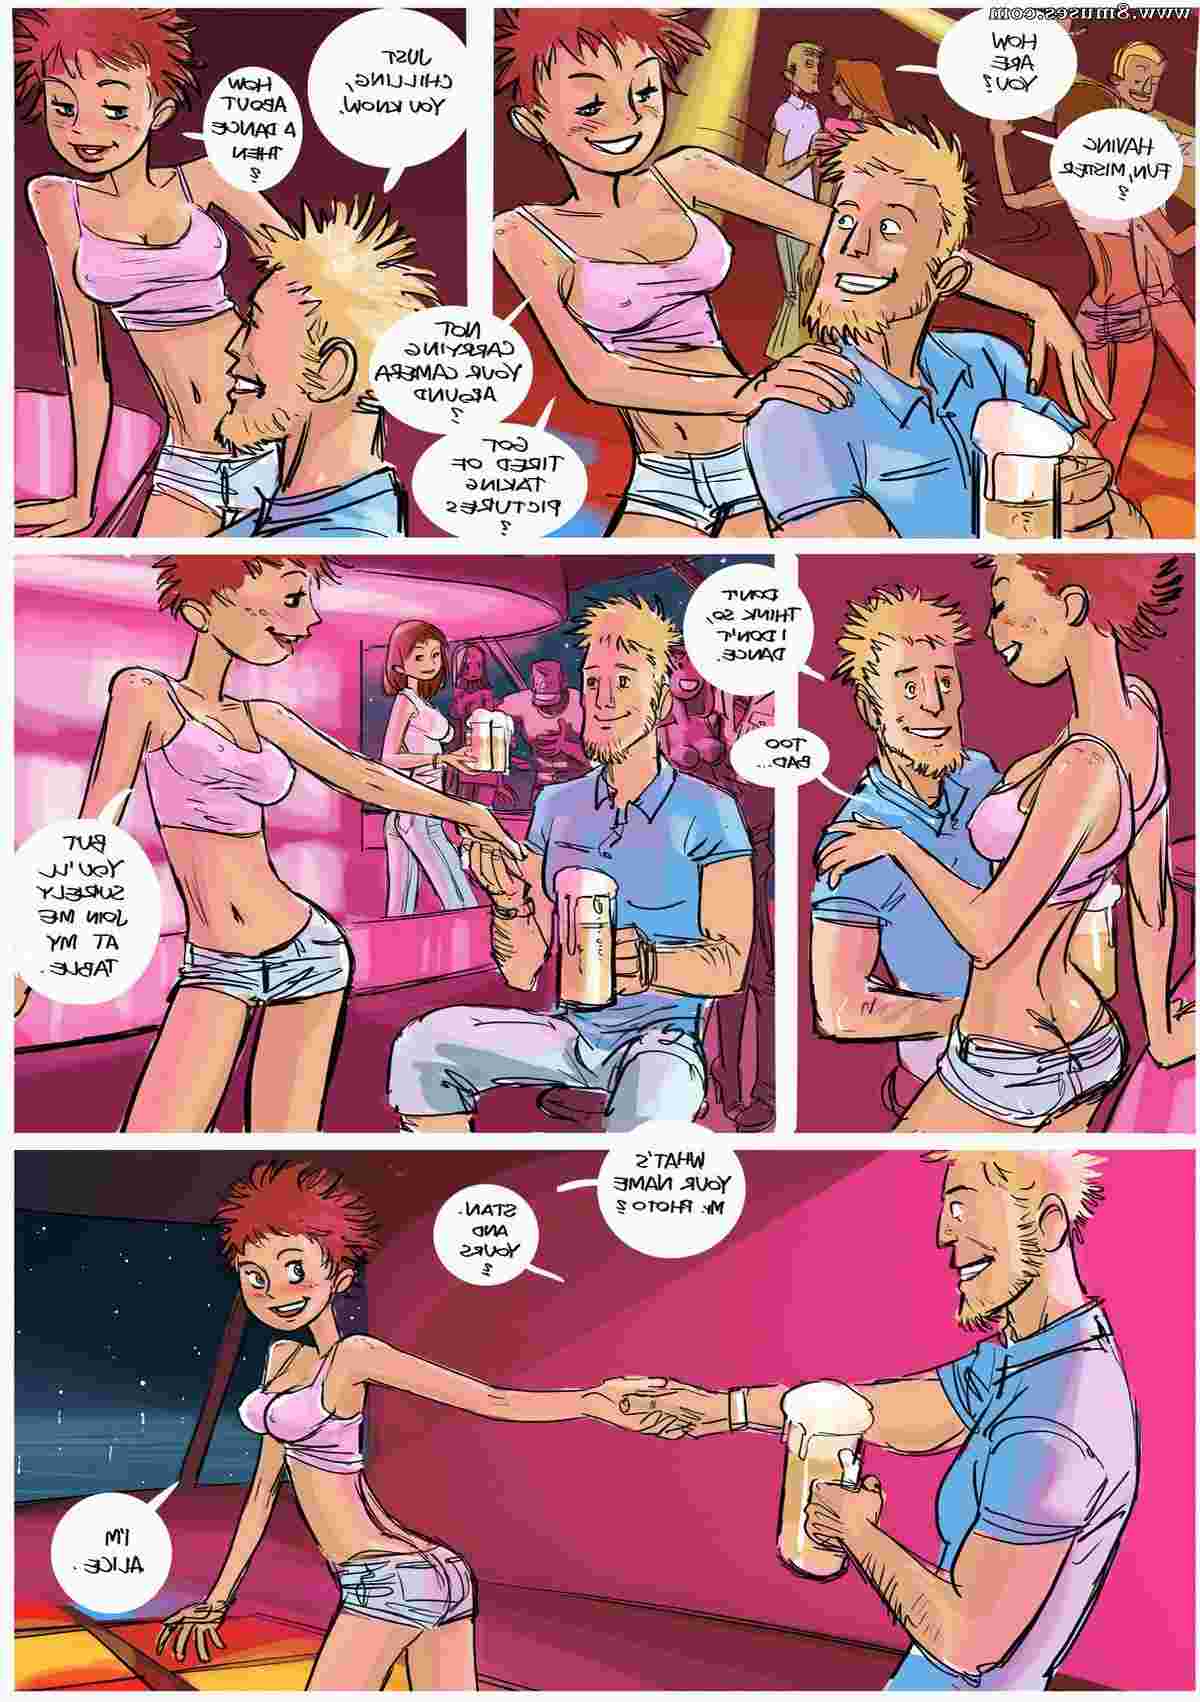 Slipshine-Comics/Lust-Boat Lust_Boat__8muses_-_Sex_and_Porn_Comics_11.jpg